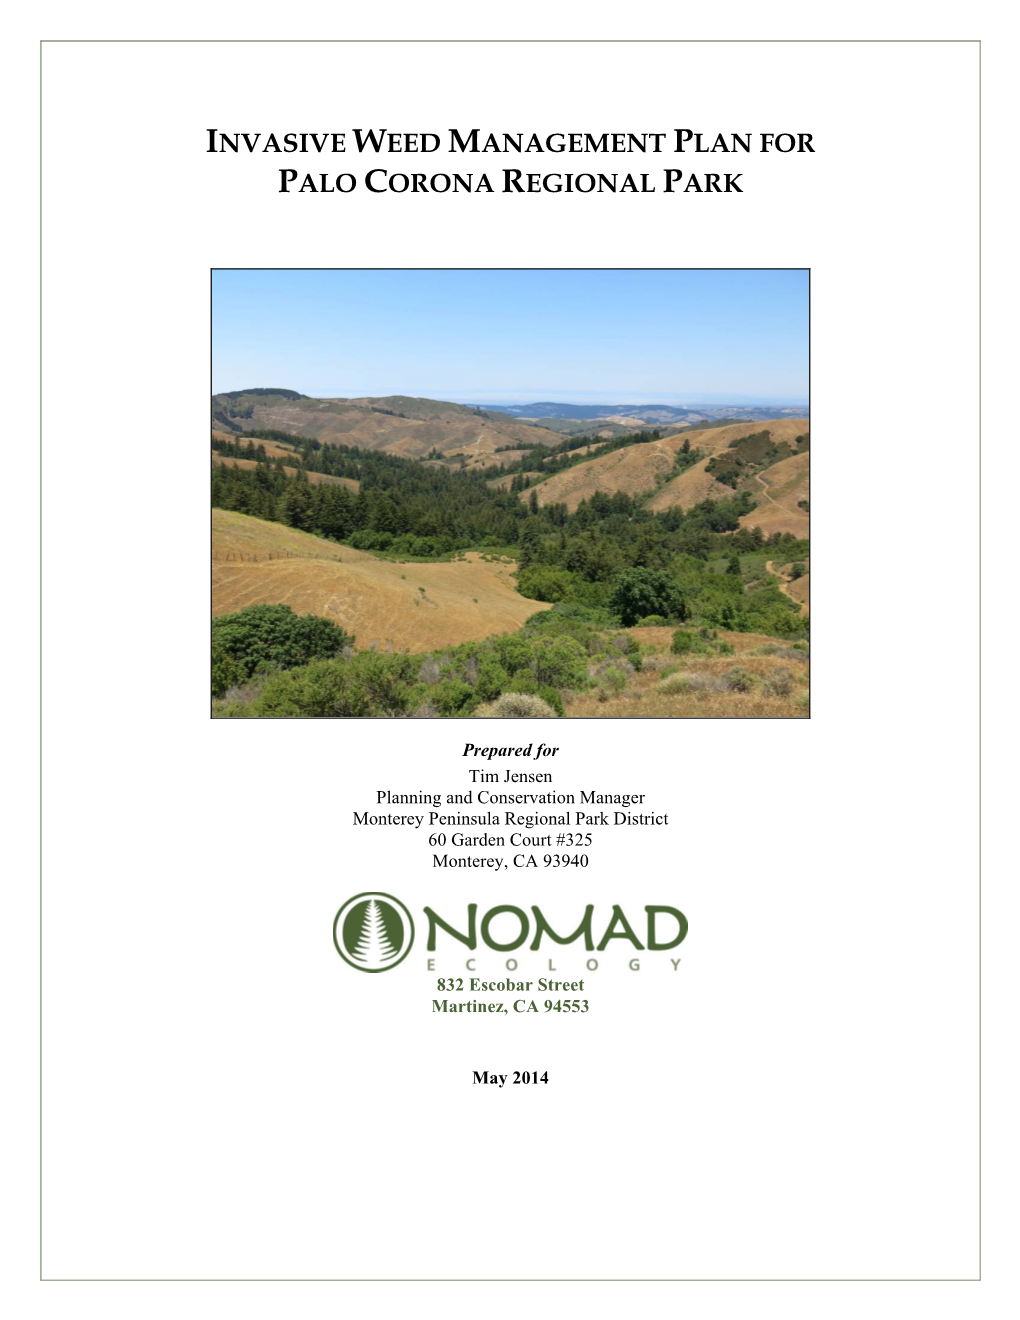 Invasive Weed Management Plan for Palo Corona Regional Park